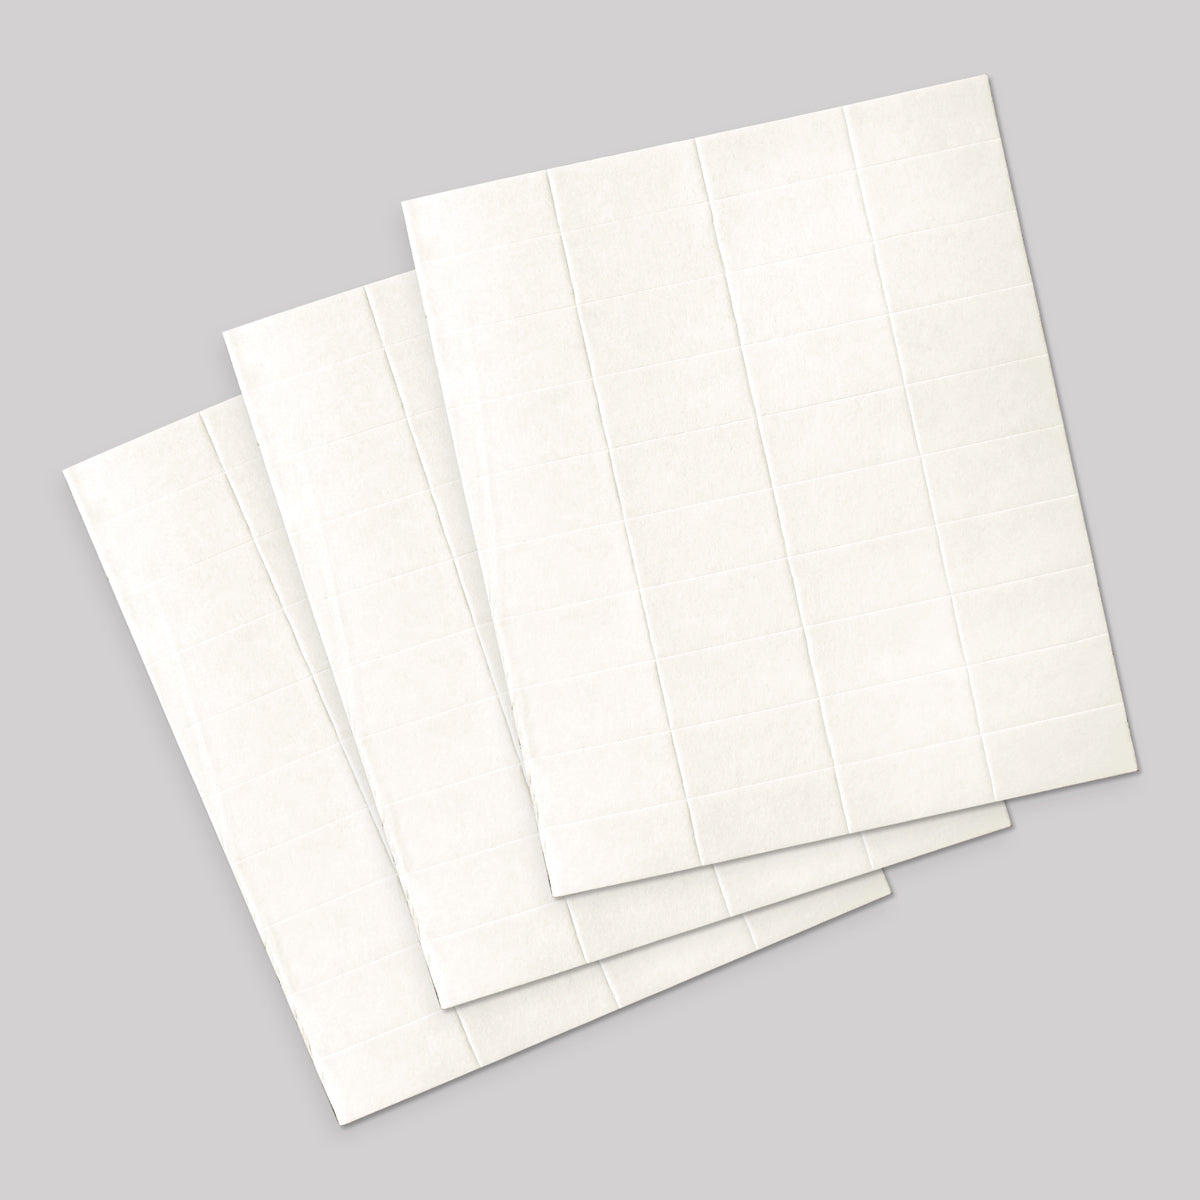 24 x 12 mm doppelseitige Klebepads – Weiß 2 mm, 3er-Pack